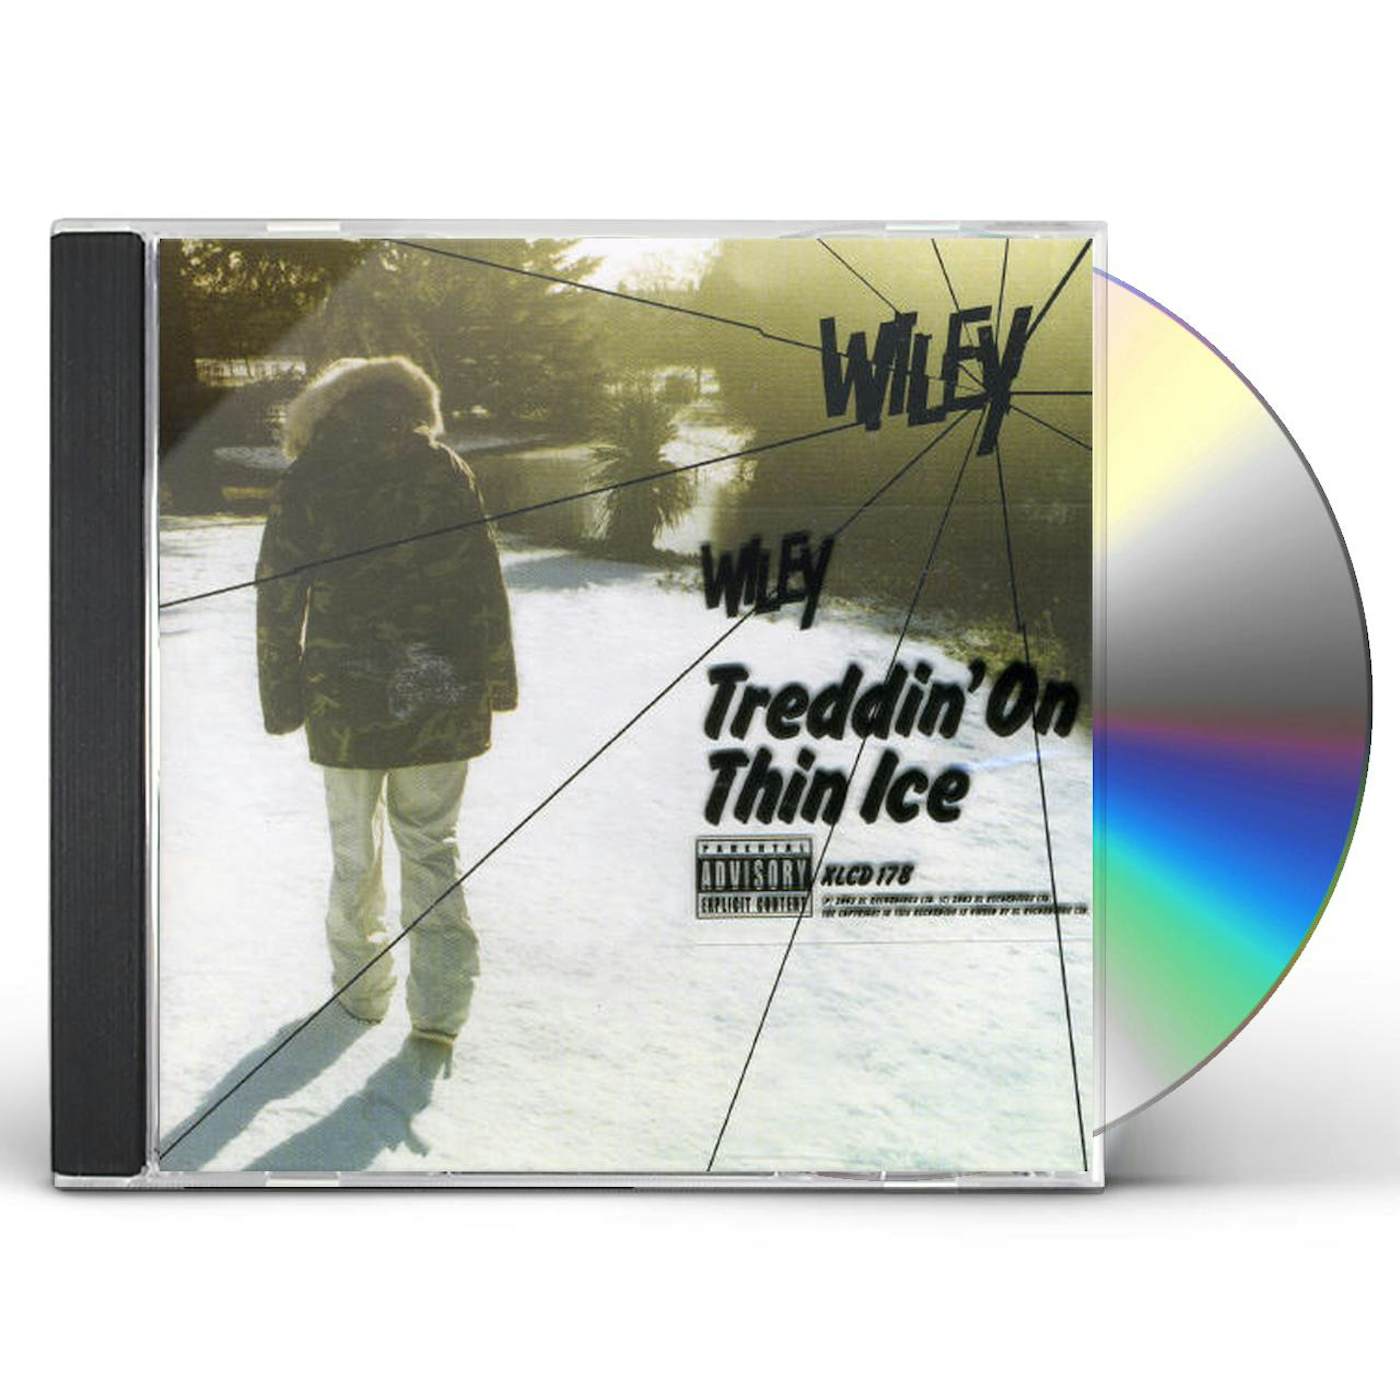 Wiley TREDDIN ON THIN ICE CD